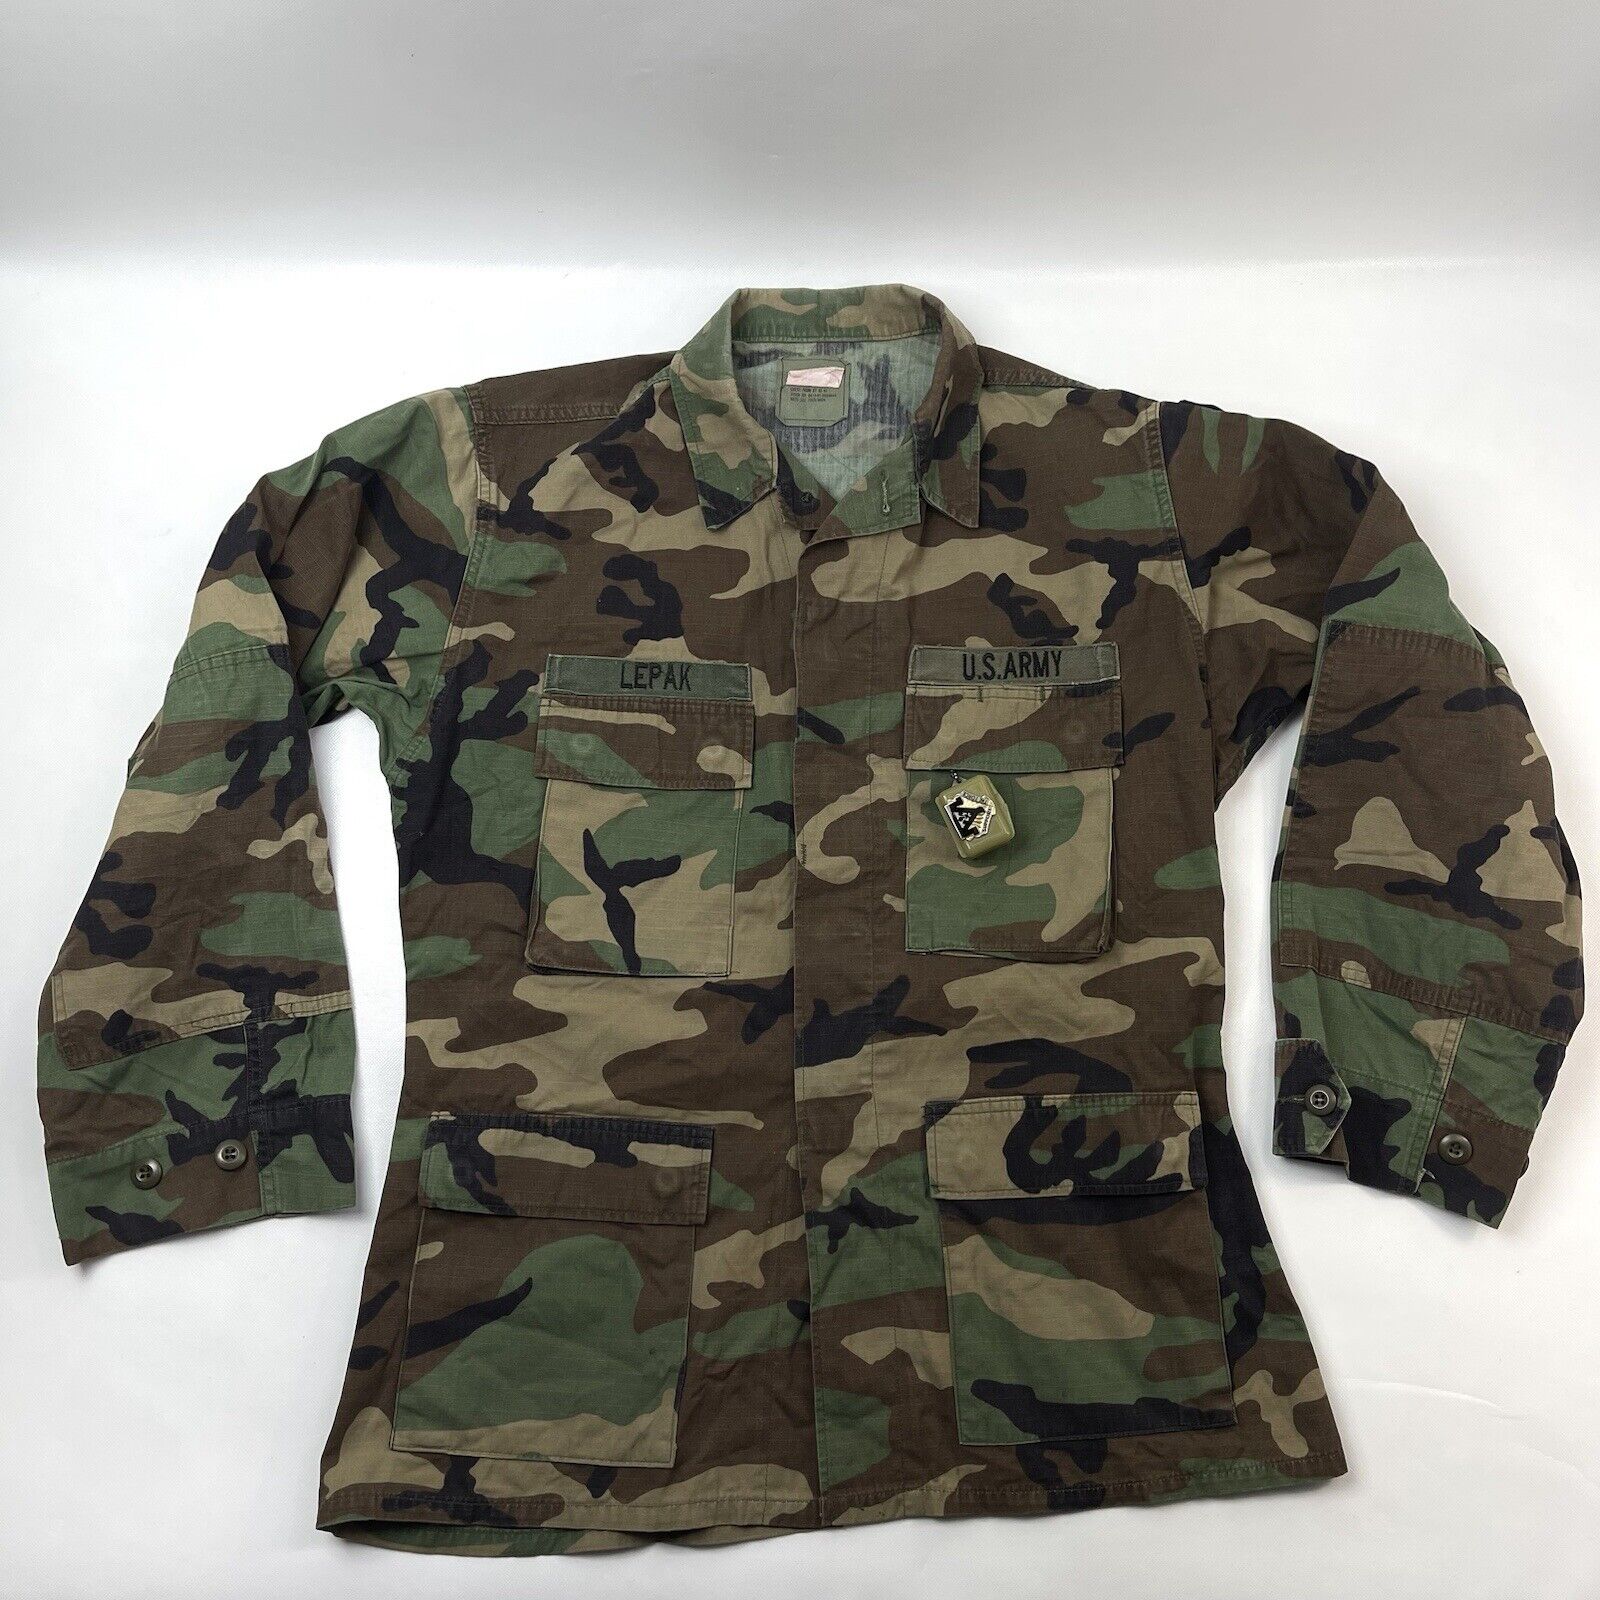 U.S. Army Green/Brown Camouflage Service Jacket Uniform Shirt Men\'s Size M